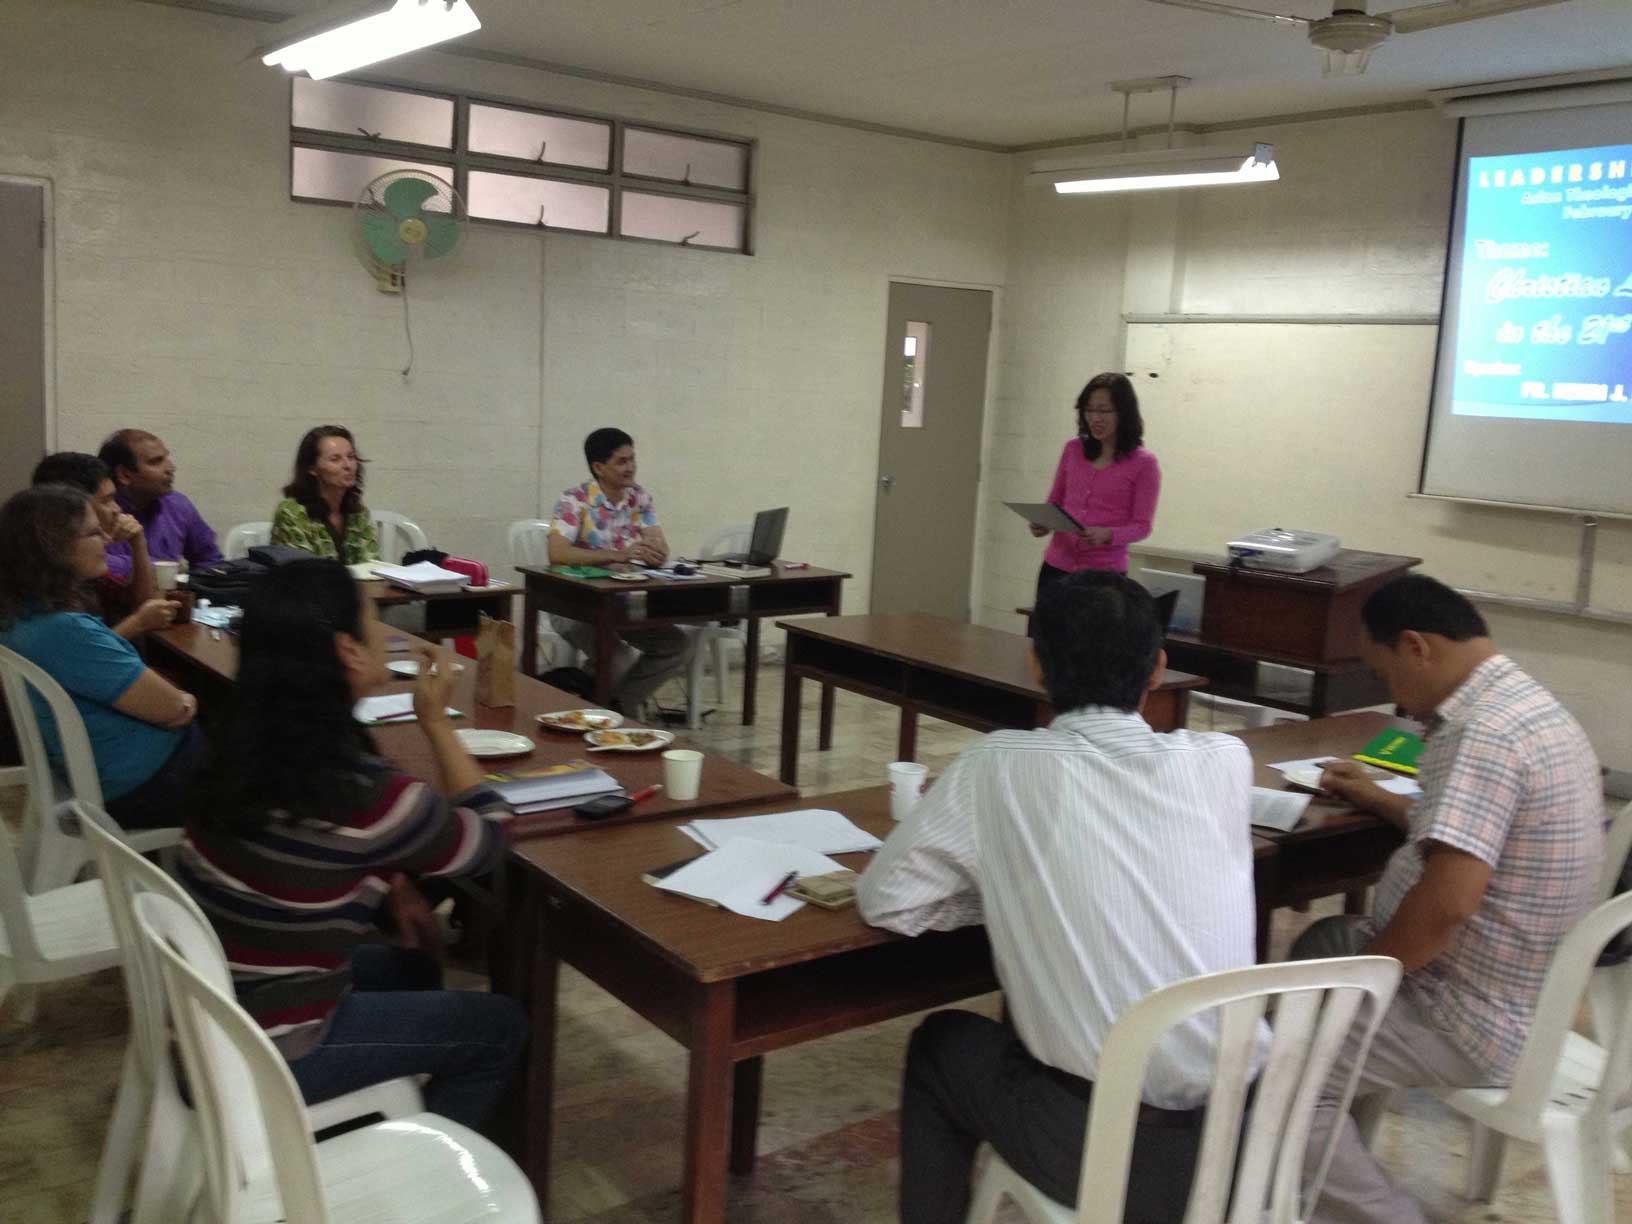 Small Group Presentations (Asian Theological Seminary Nouwen Class) - Feb. 1